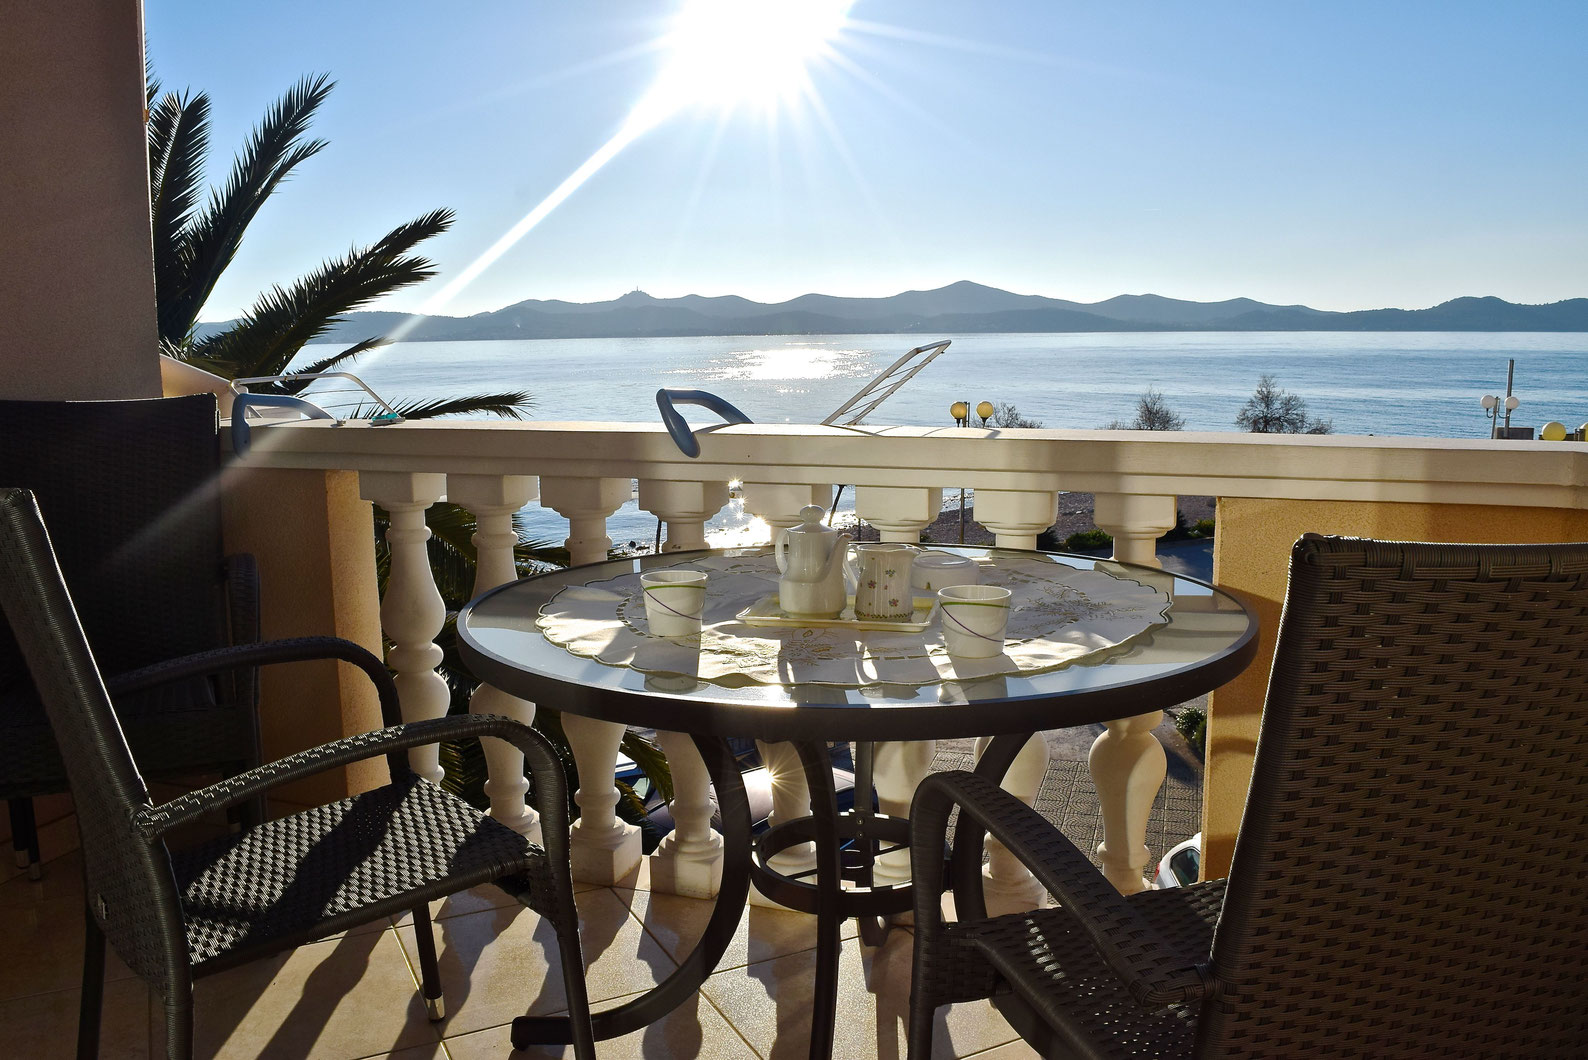 Best Place to Stay in Zadar, Croatia - MyHammockTime.com | Travel Blog